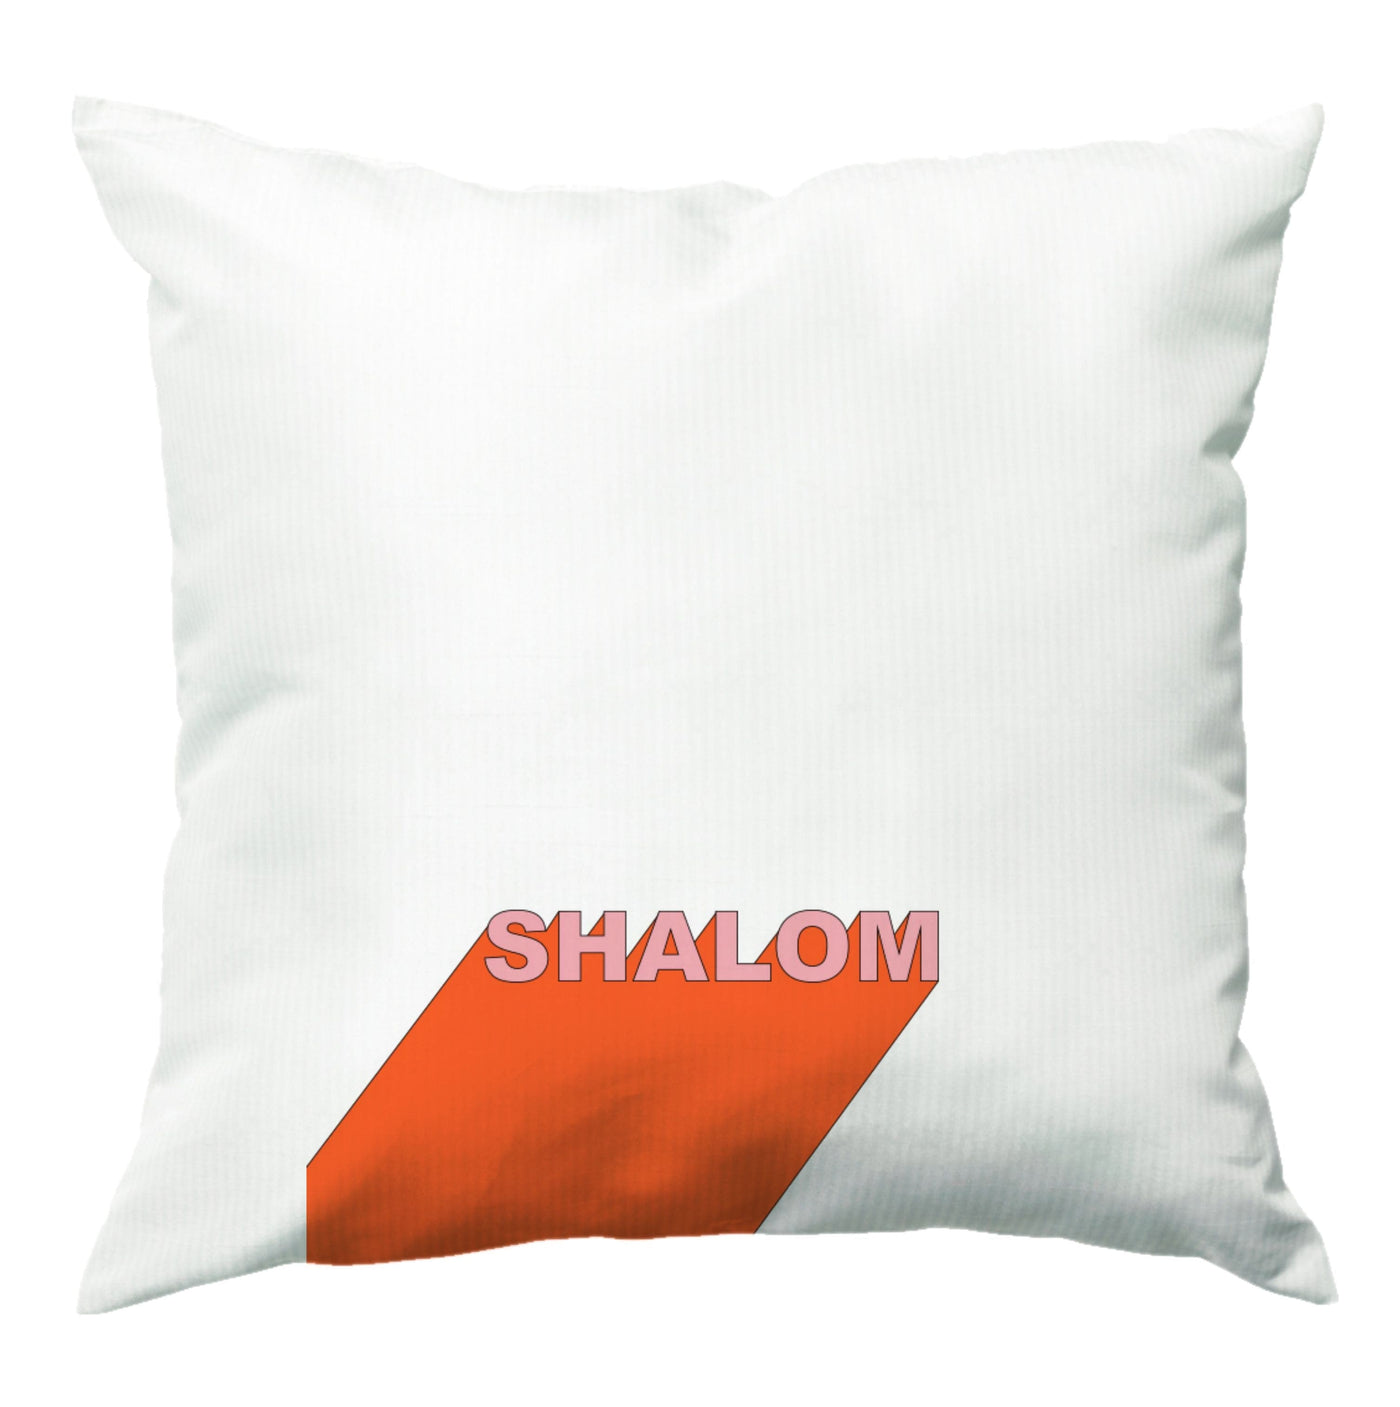 Shalom - Friday Night Dinner Cushion